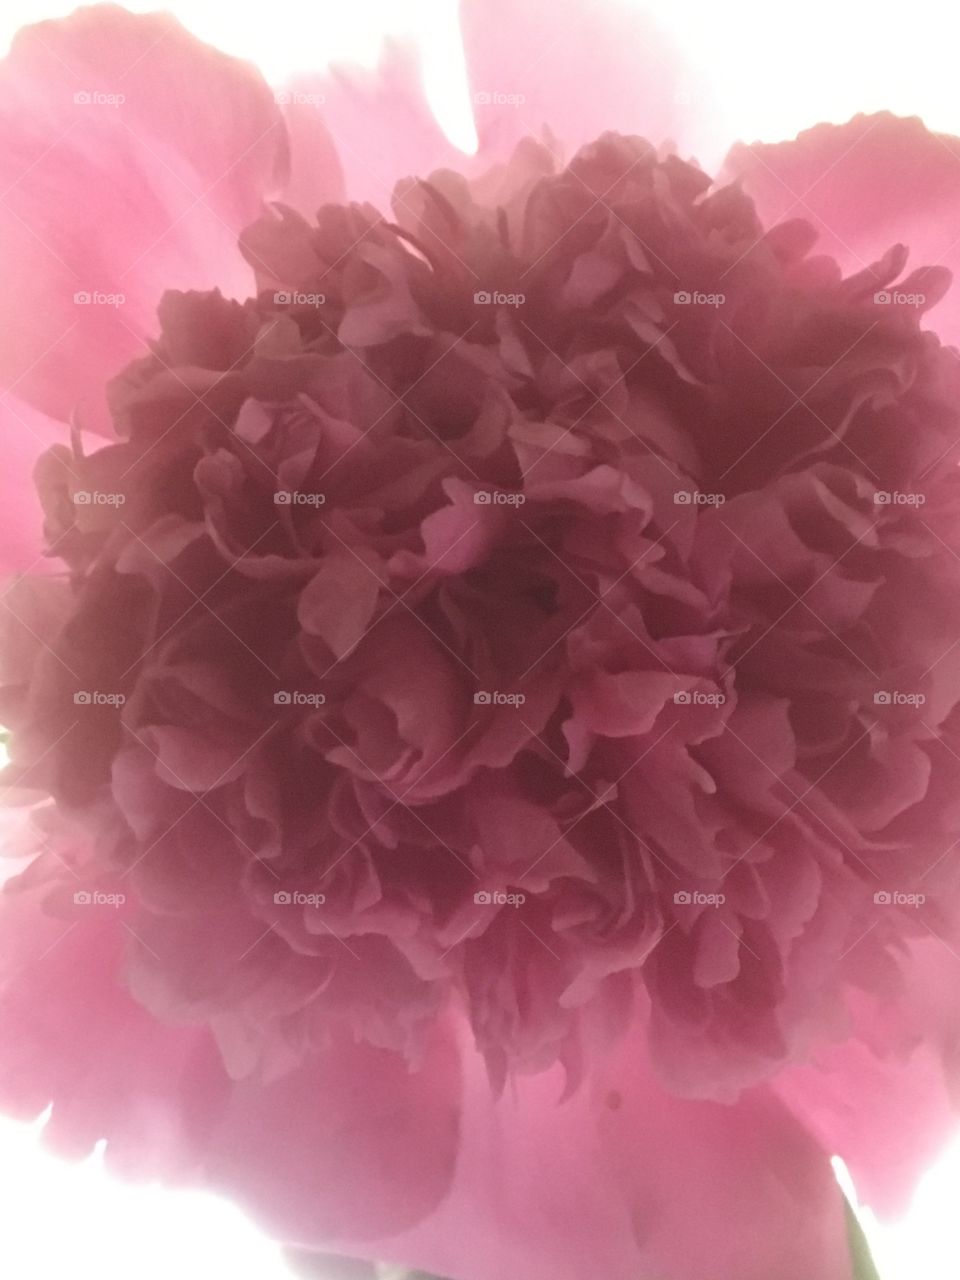 Soft sunlight filter - pink peony rose 